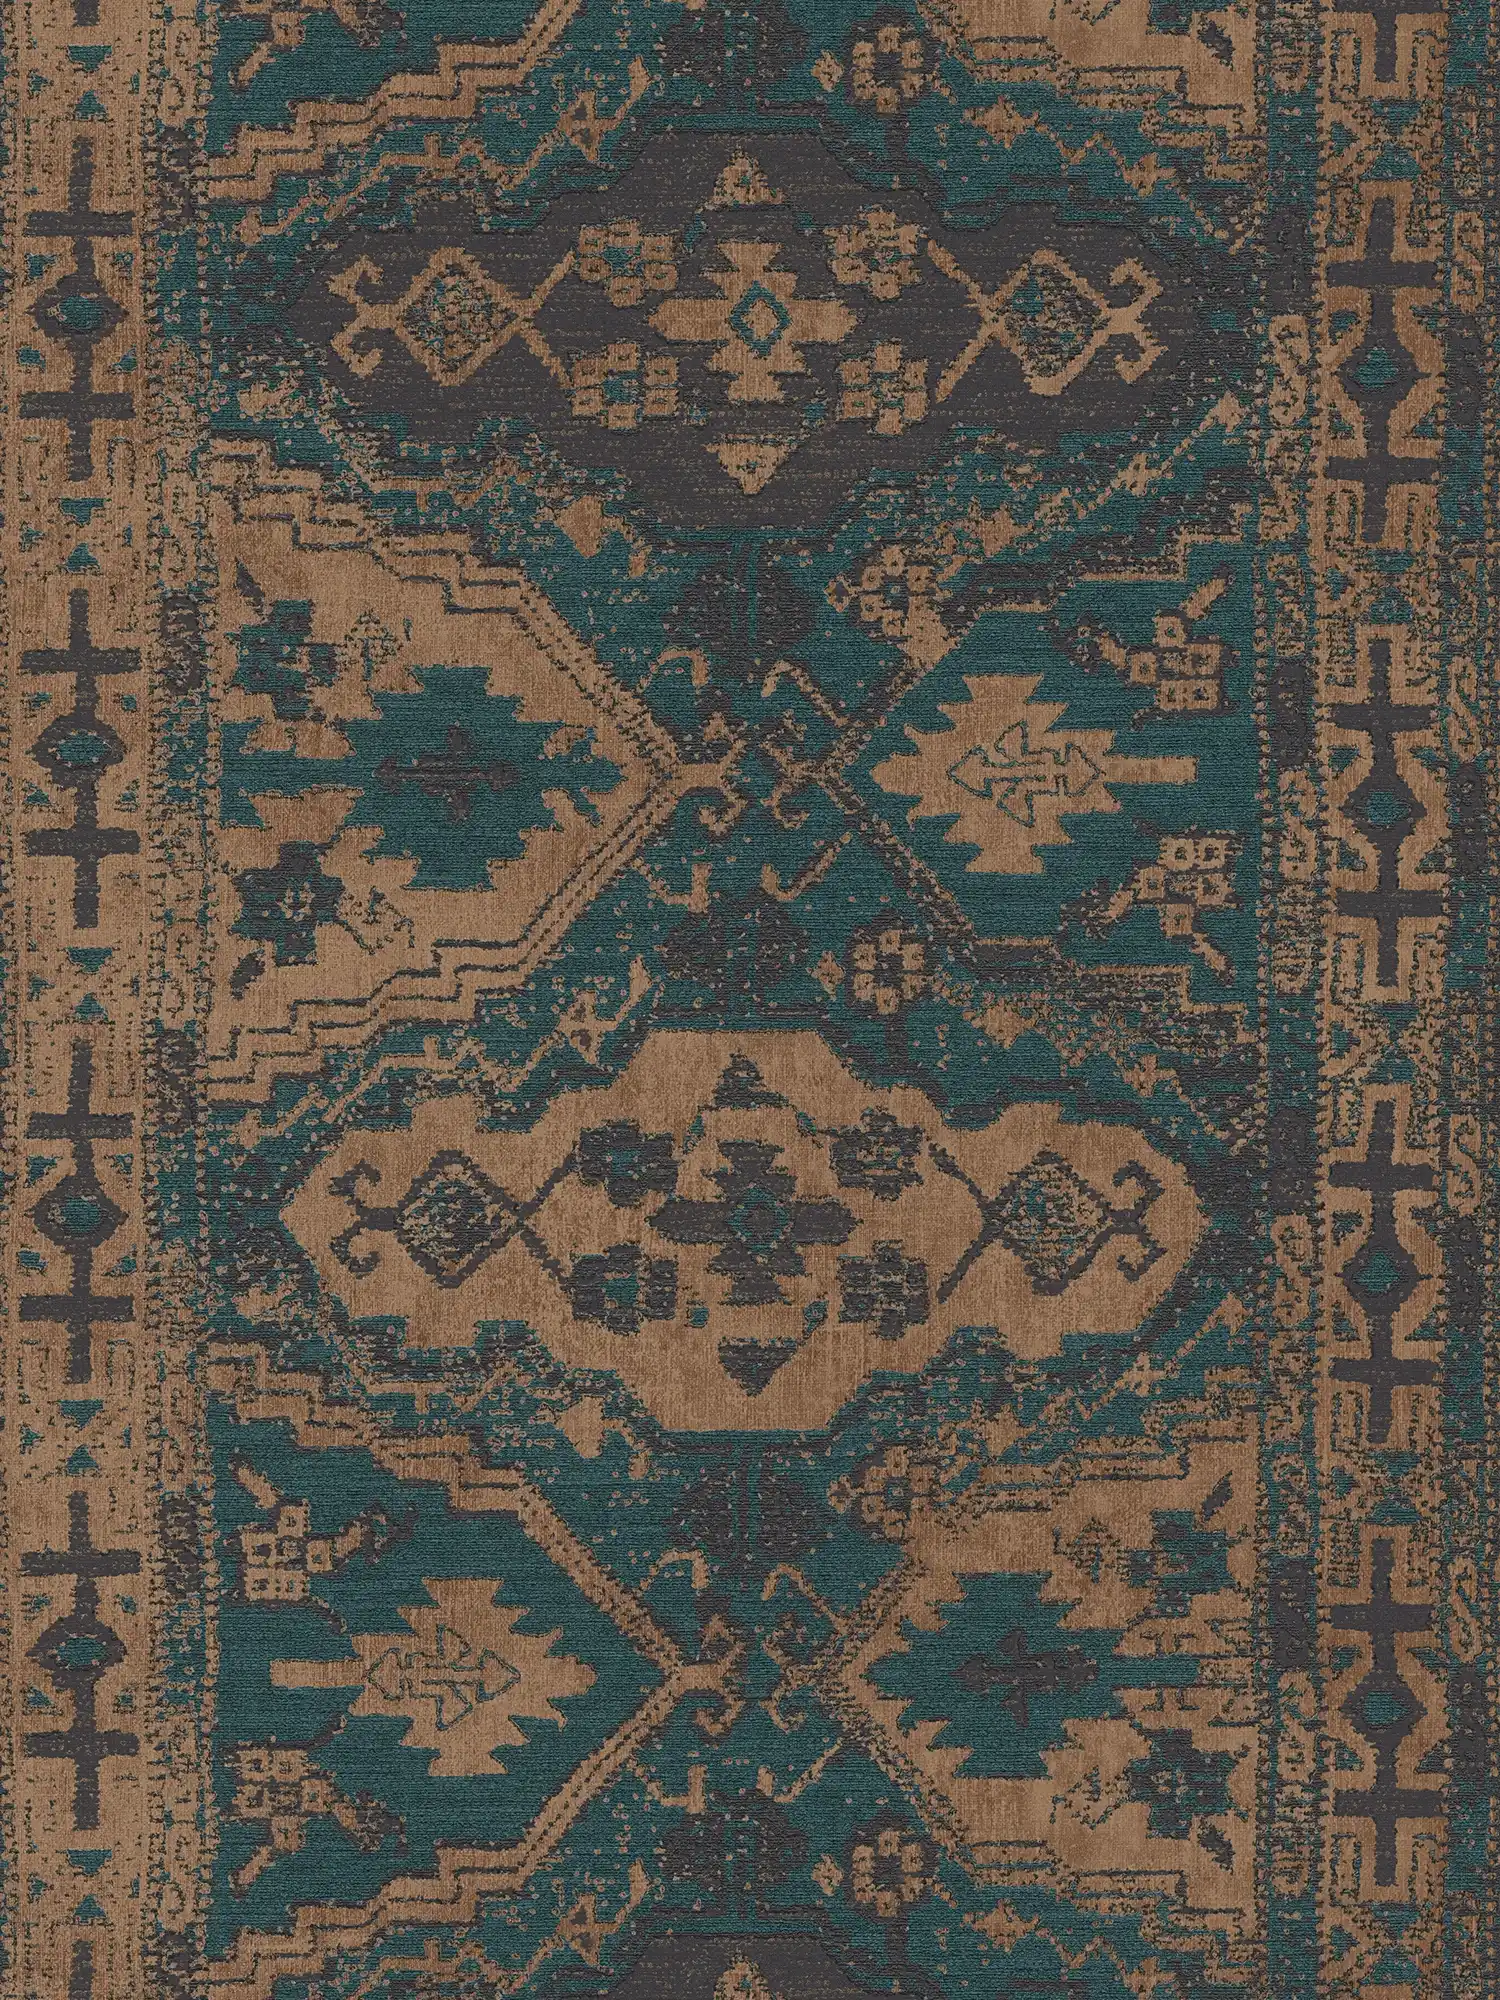 Non-woven wallpaper oriental design elements - blue, green, black
